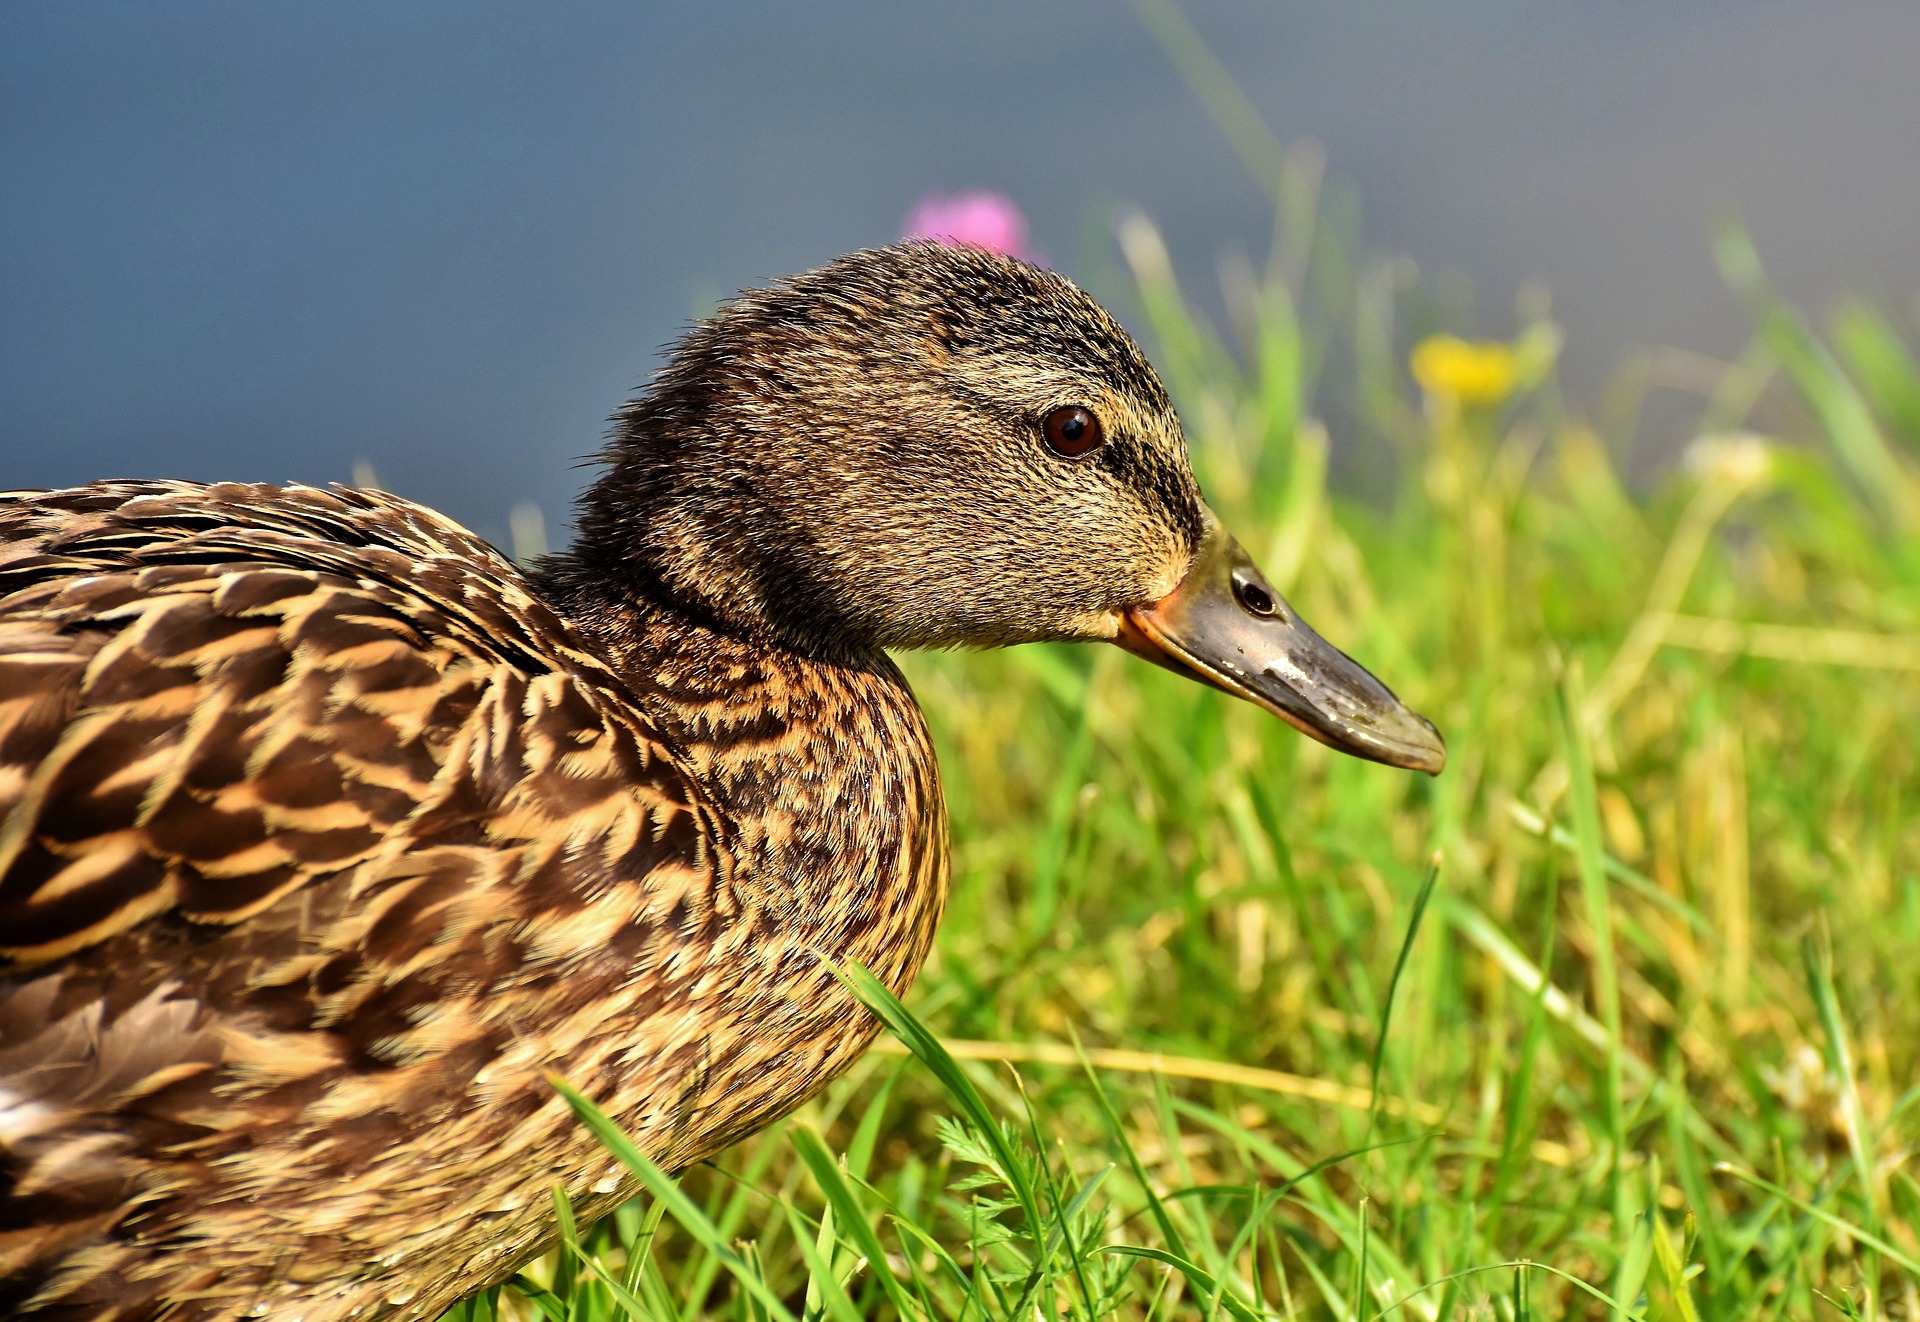 A mallard duck by Capri23auto from Pixabay